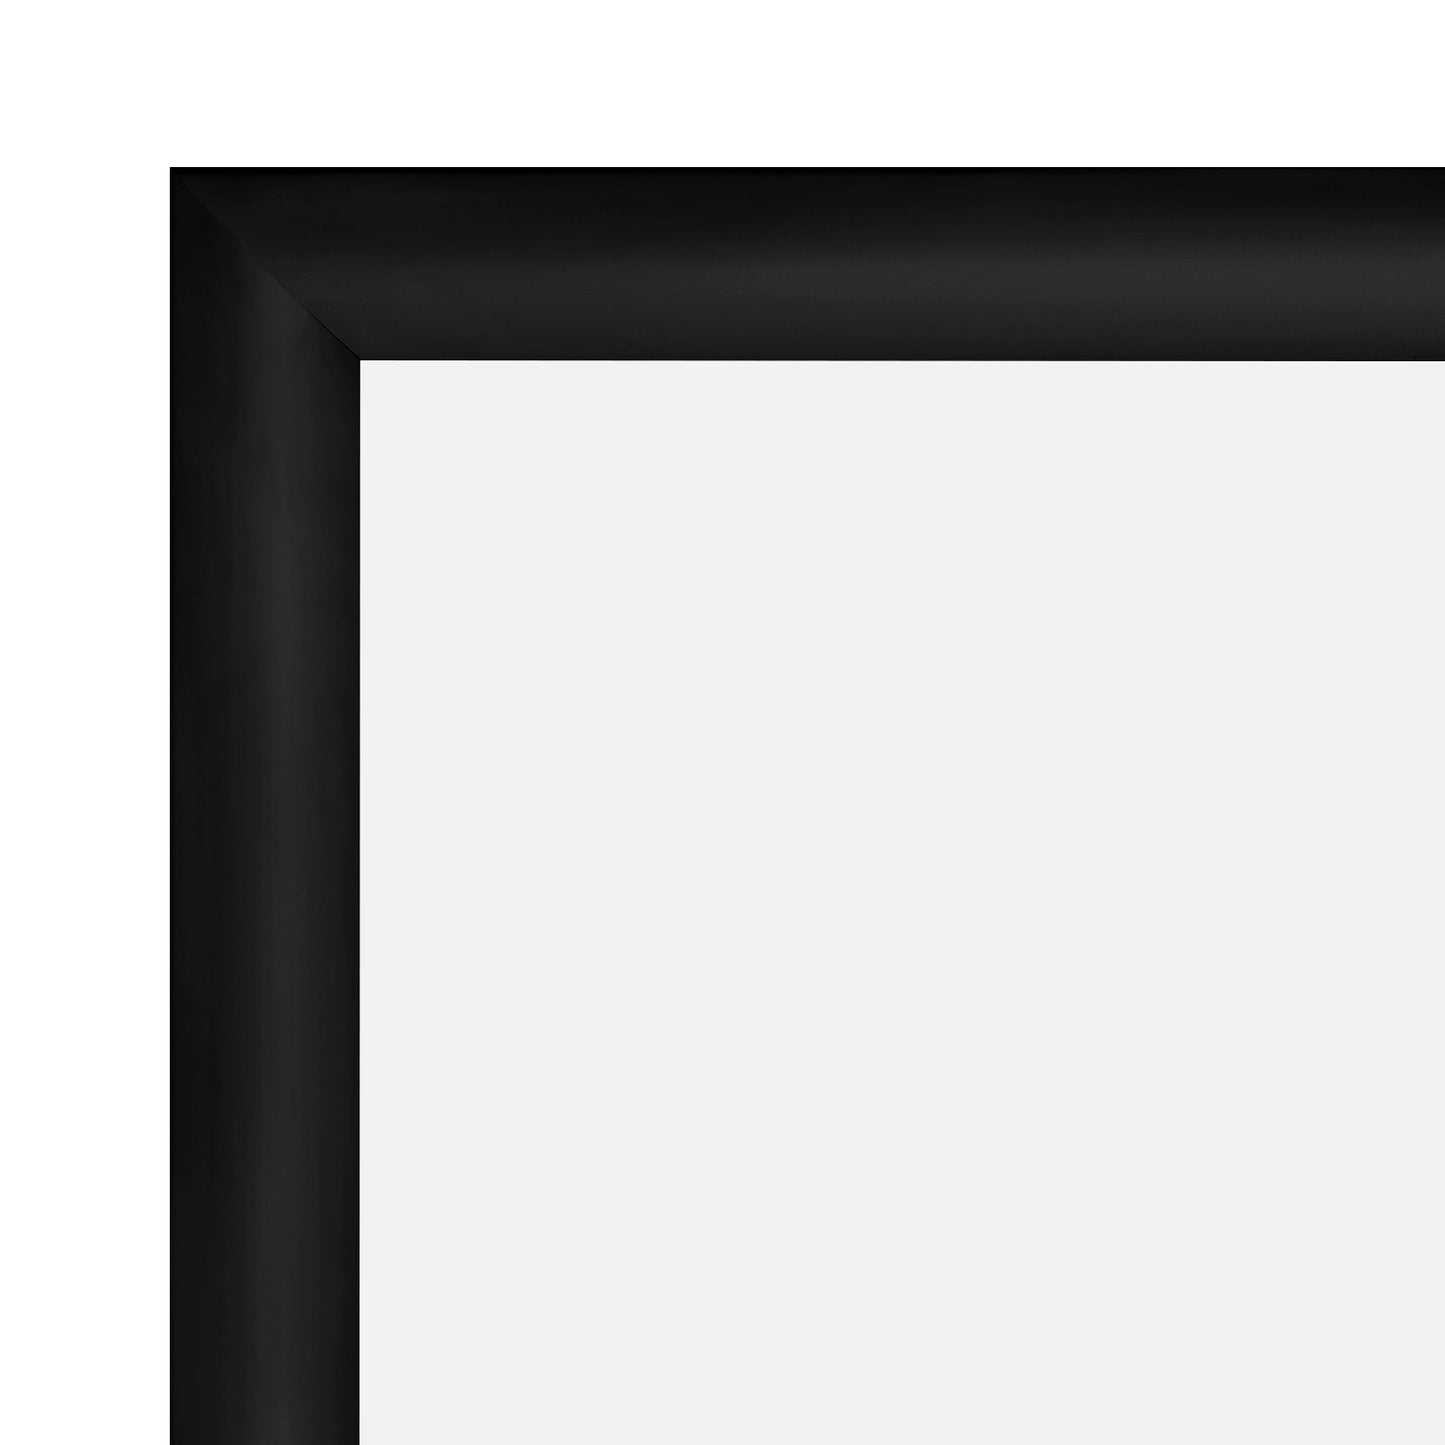 20x28 Black SnapeZo® Snap Frame - 1.2" Profile